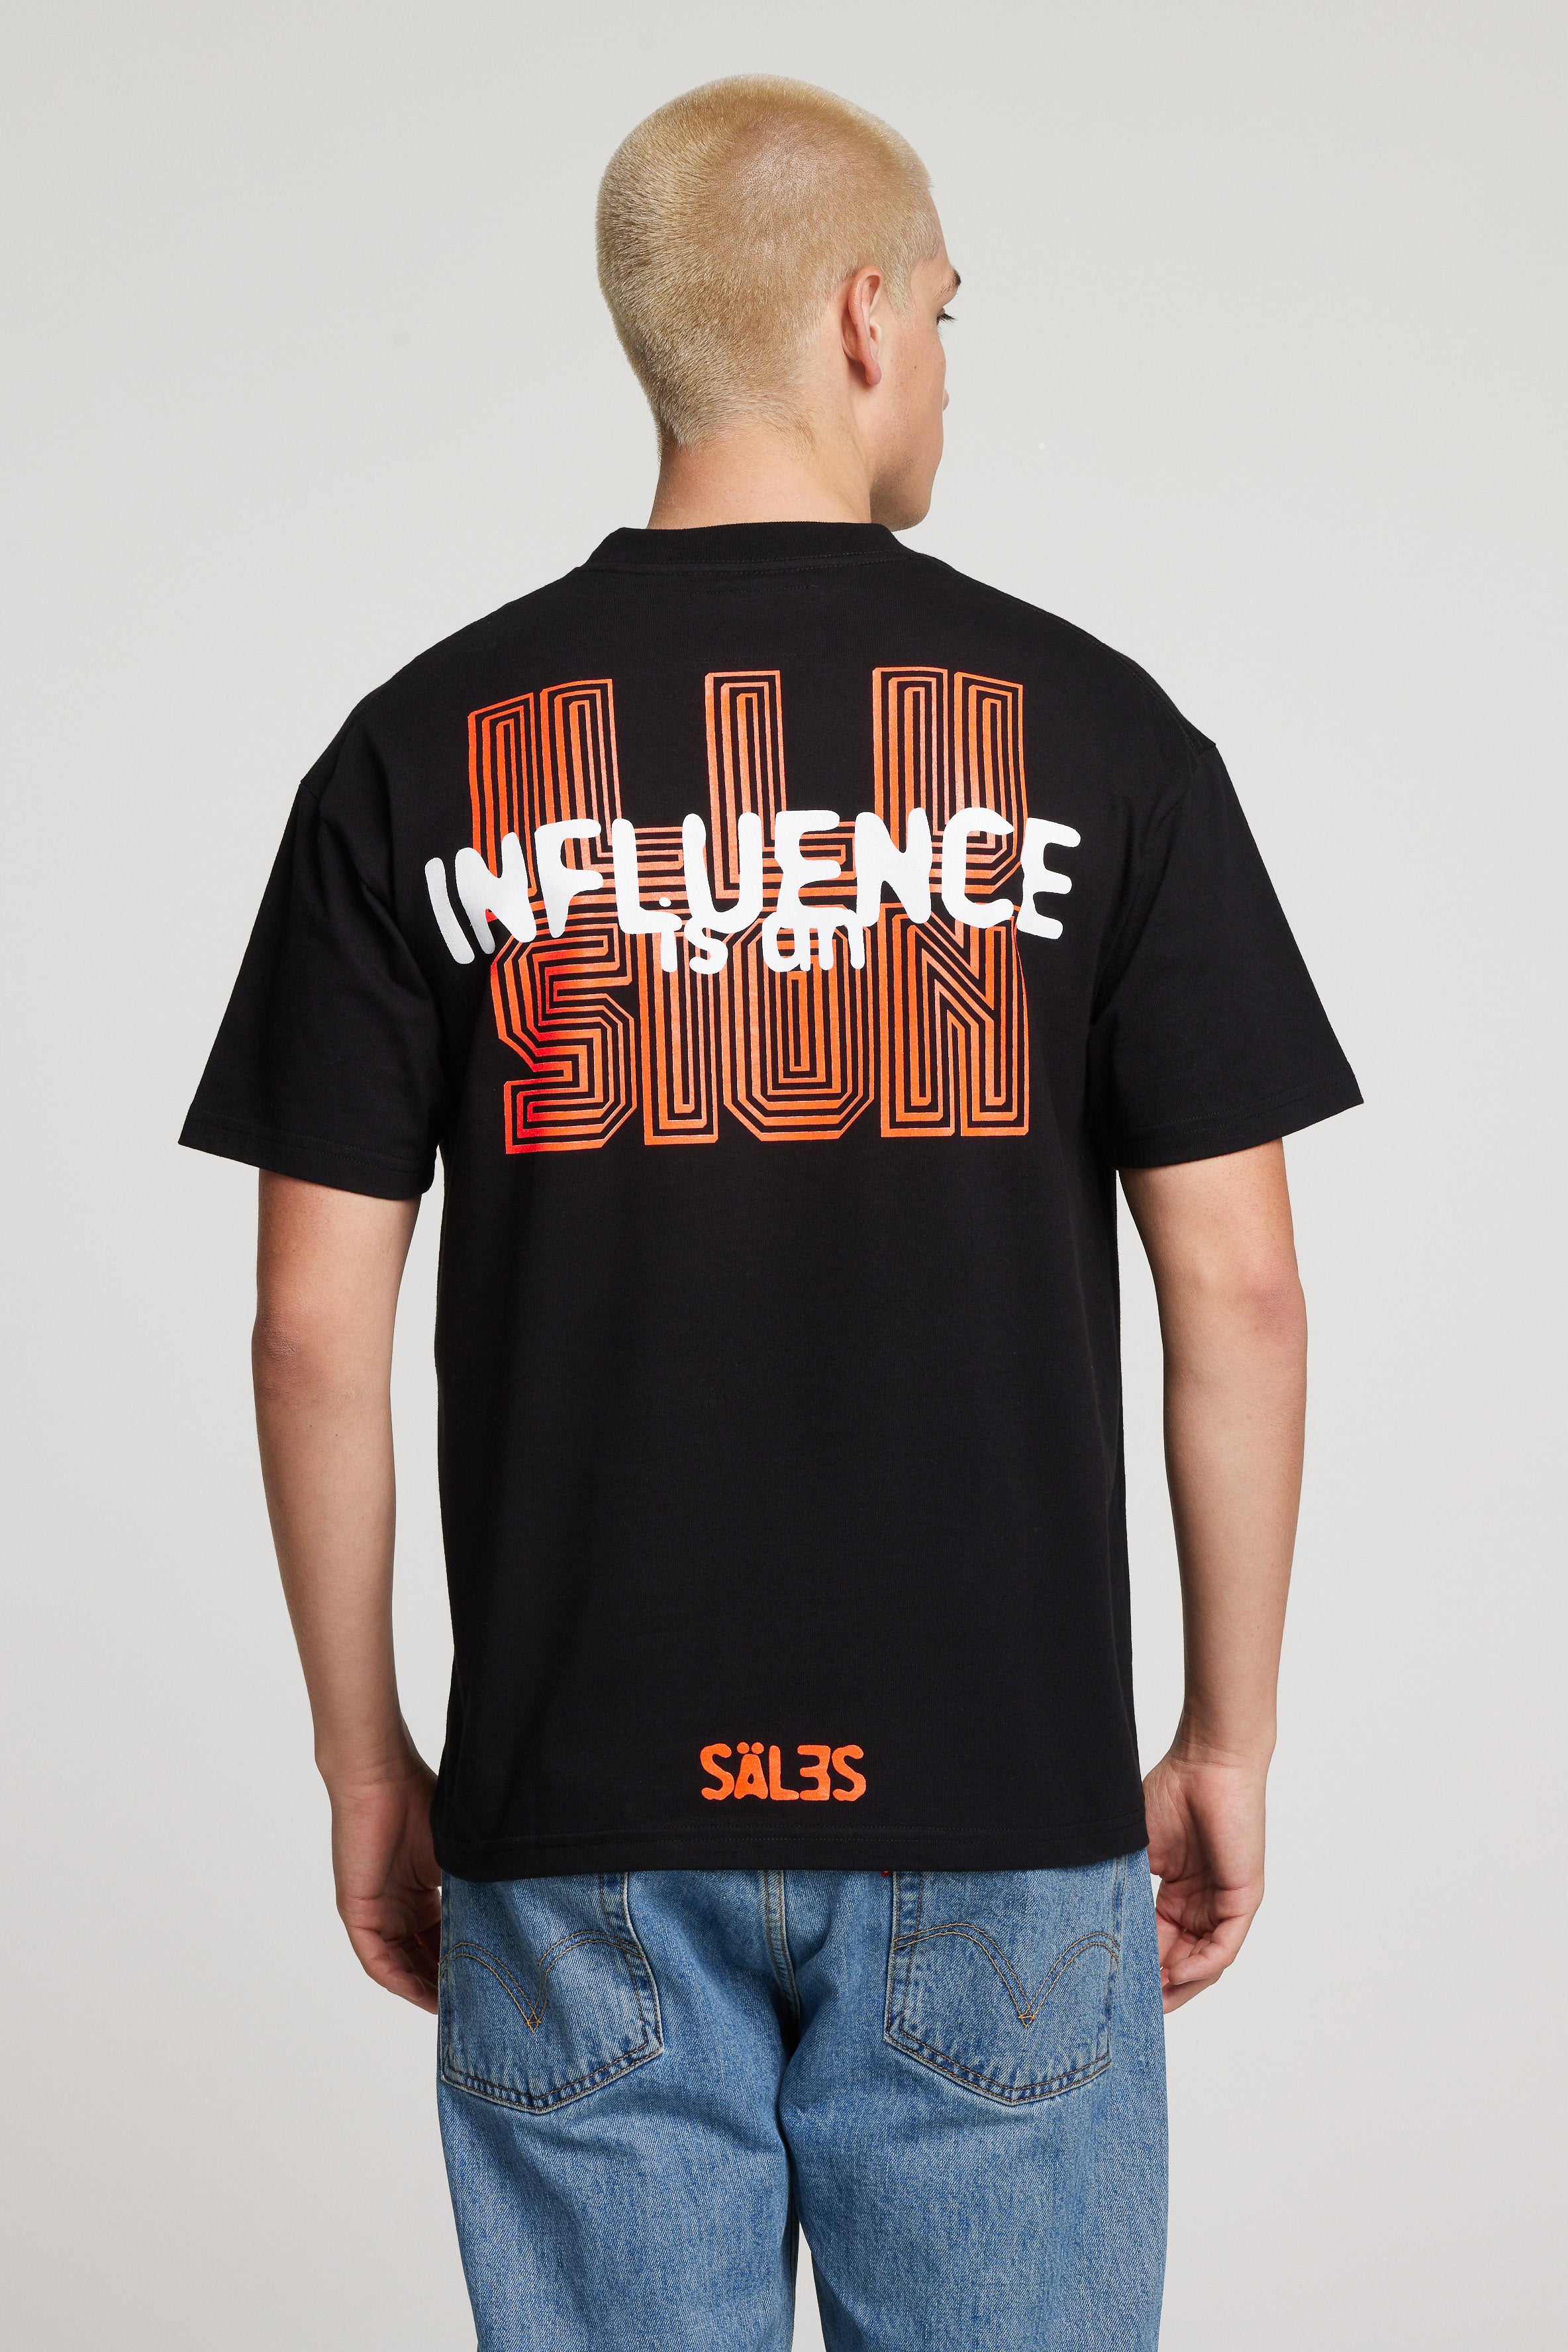 influence.ial